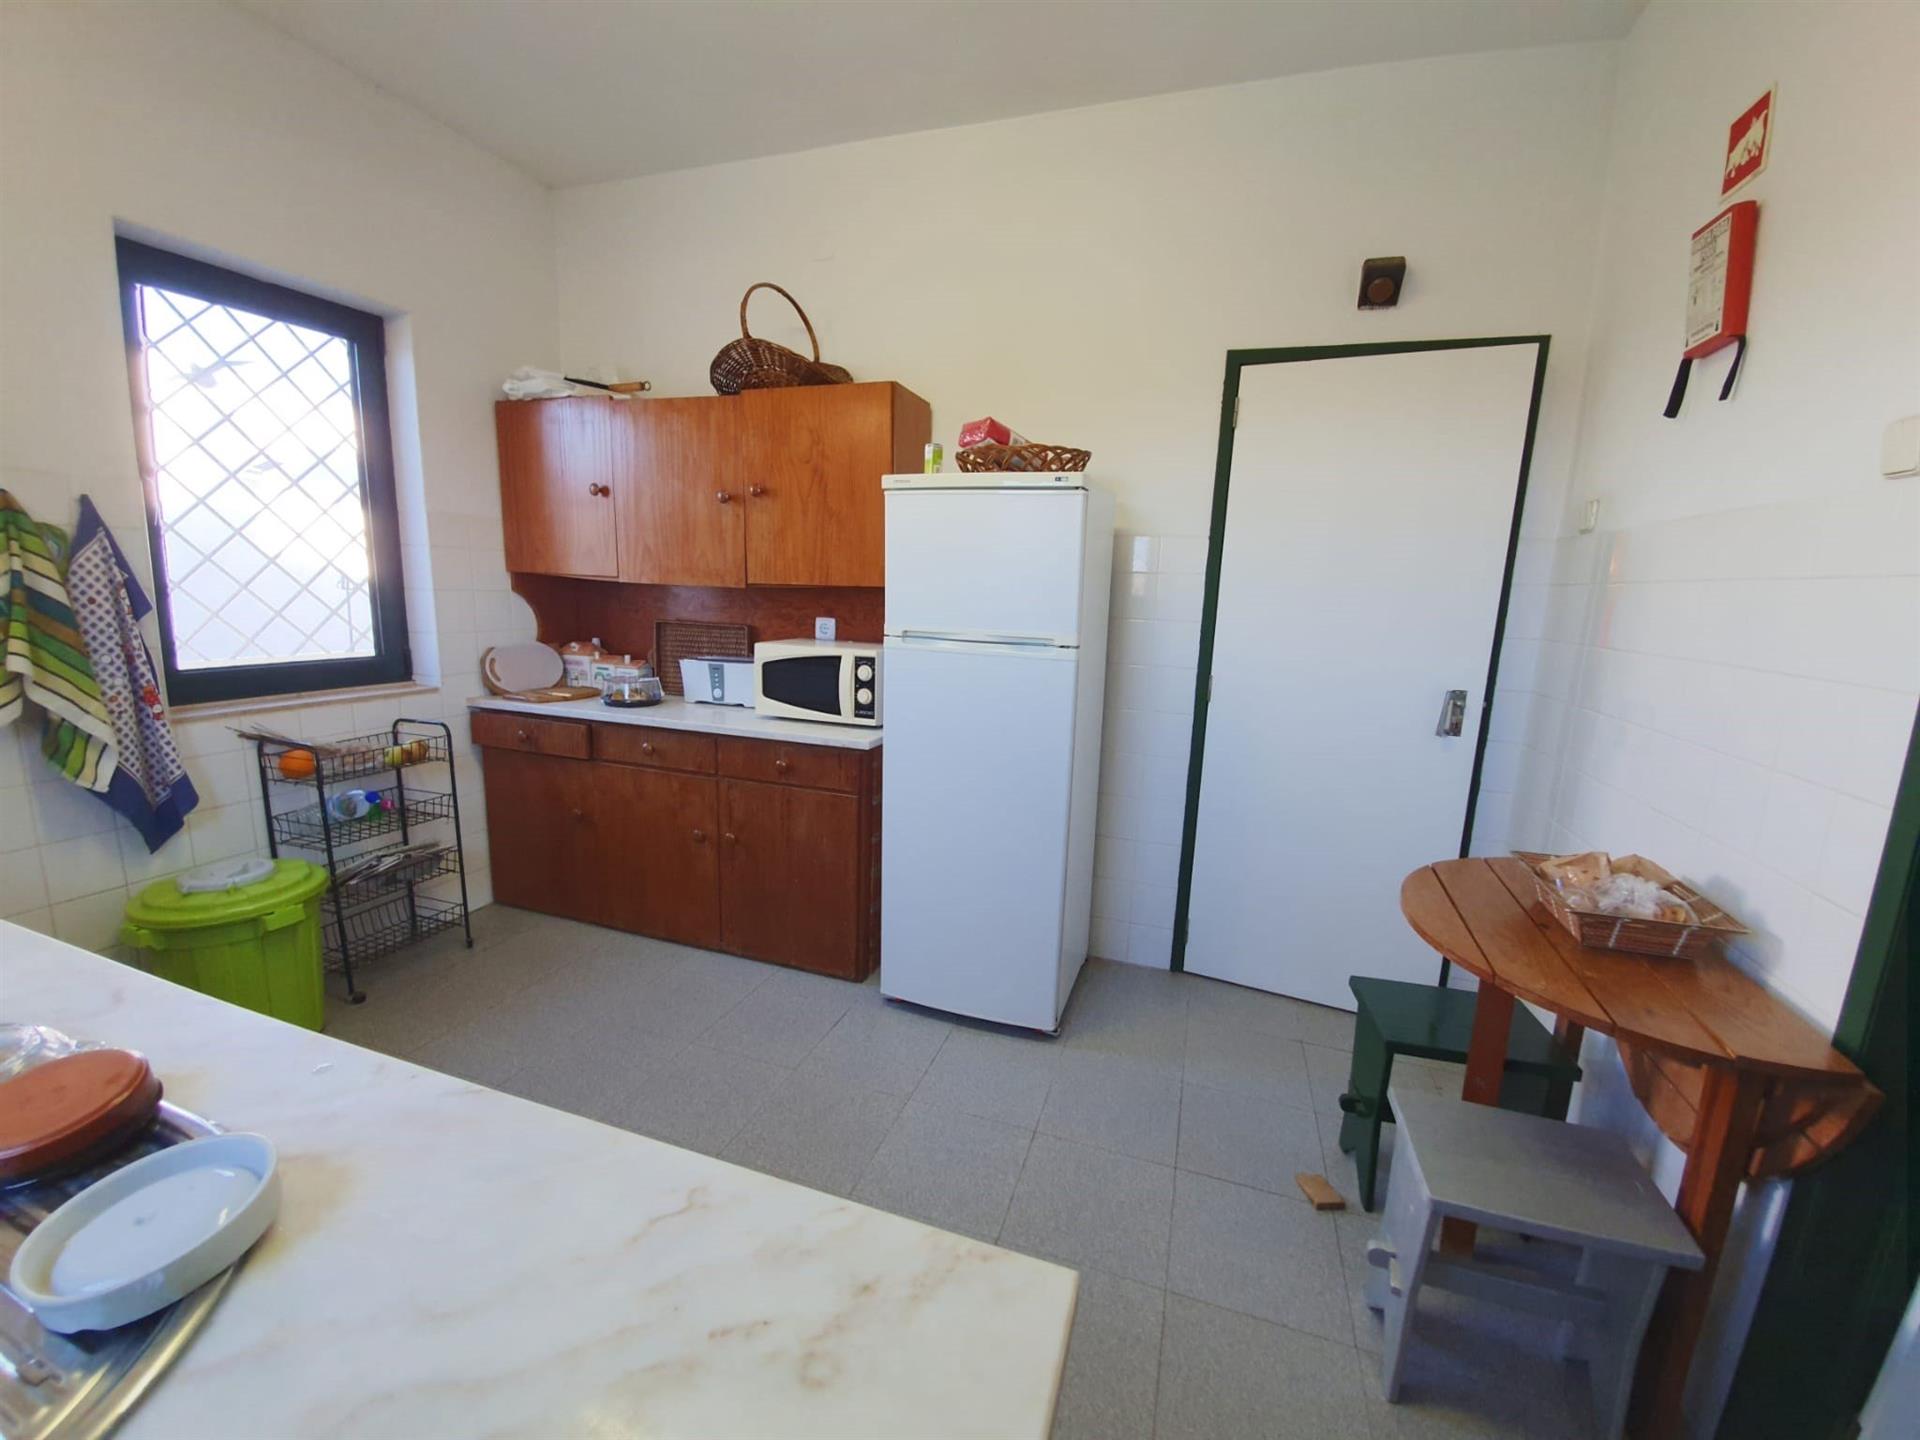 3 + 3 bedroom villa with garage for sale in Alvor